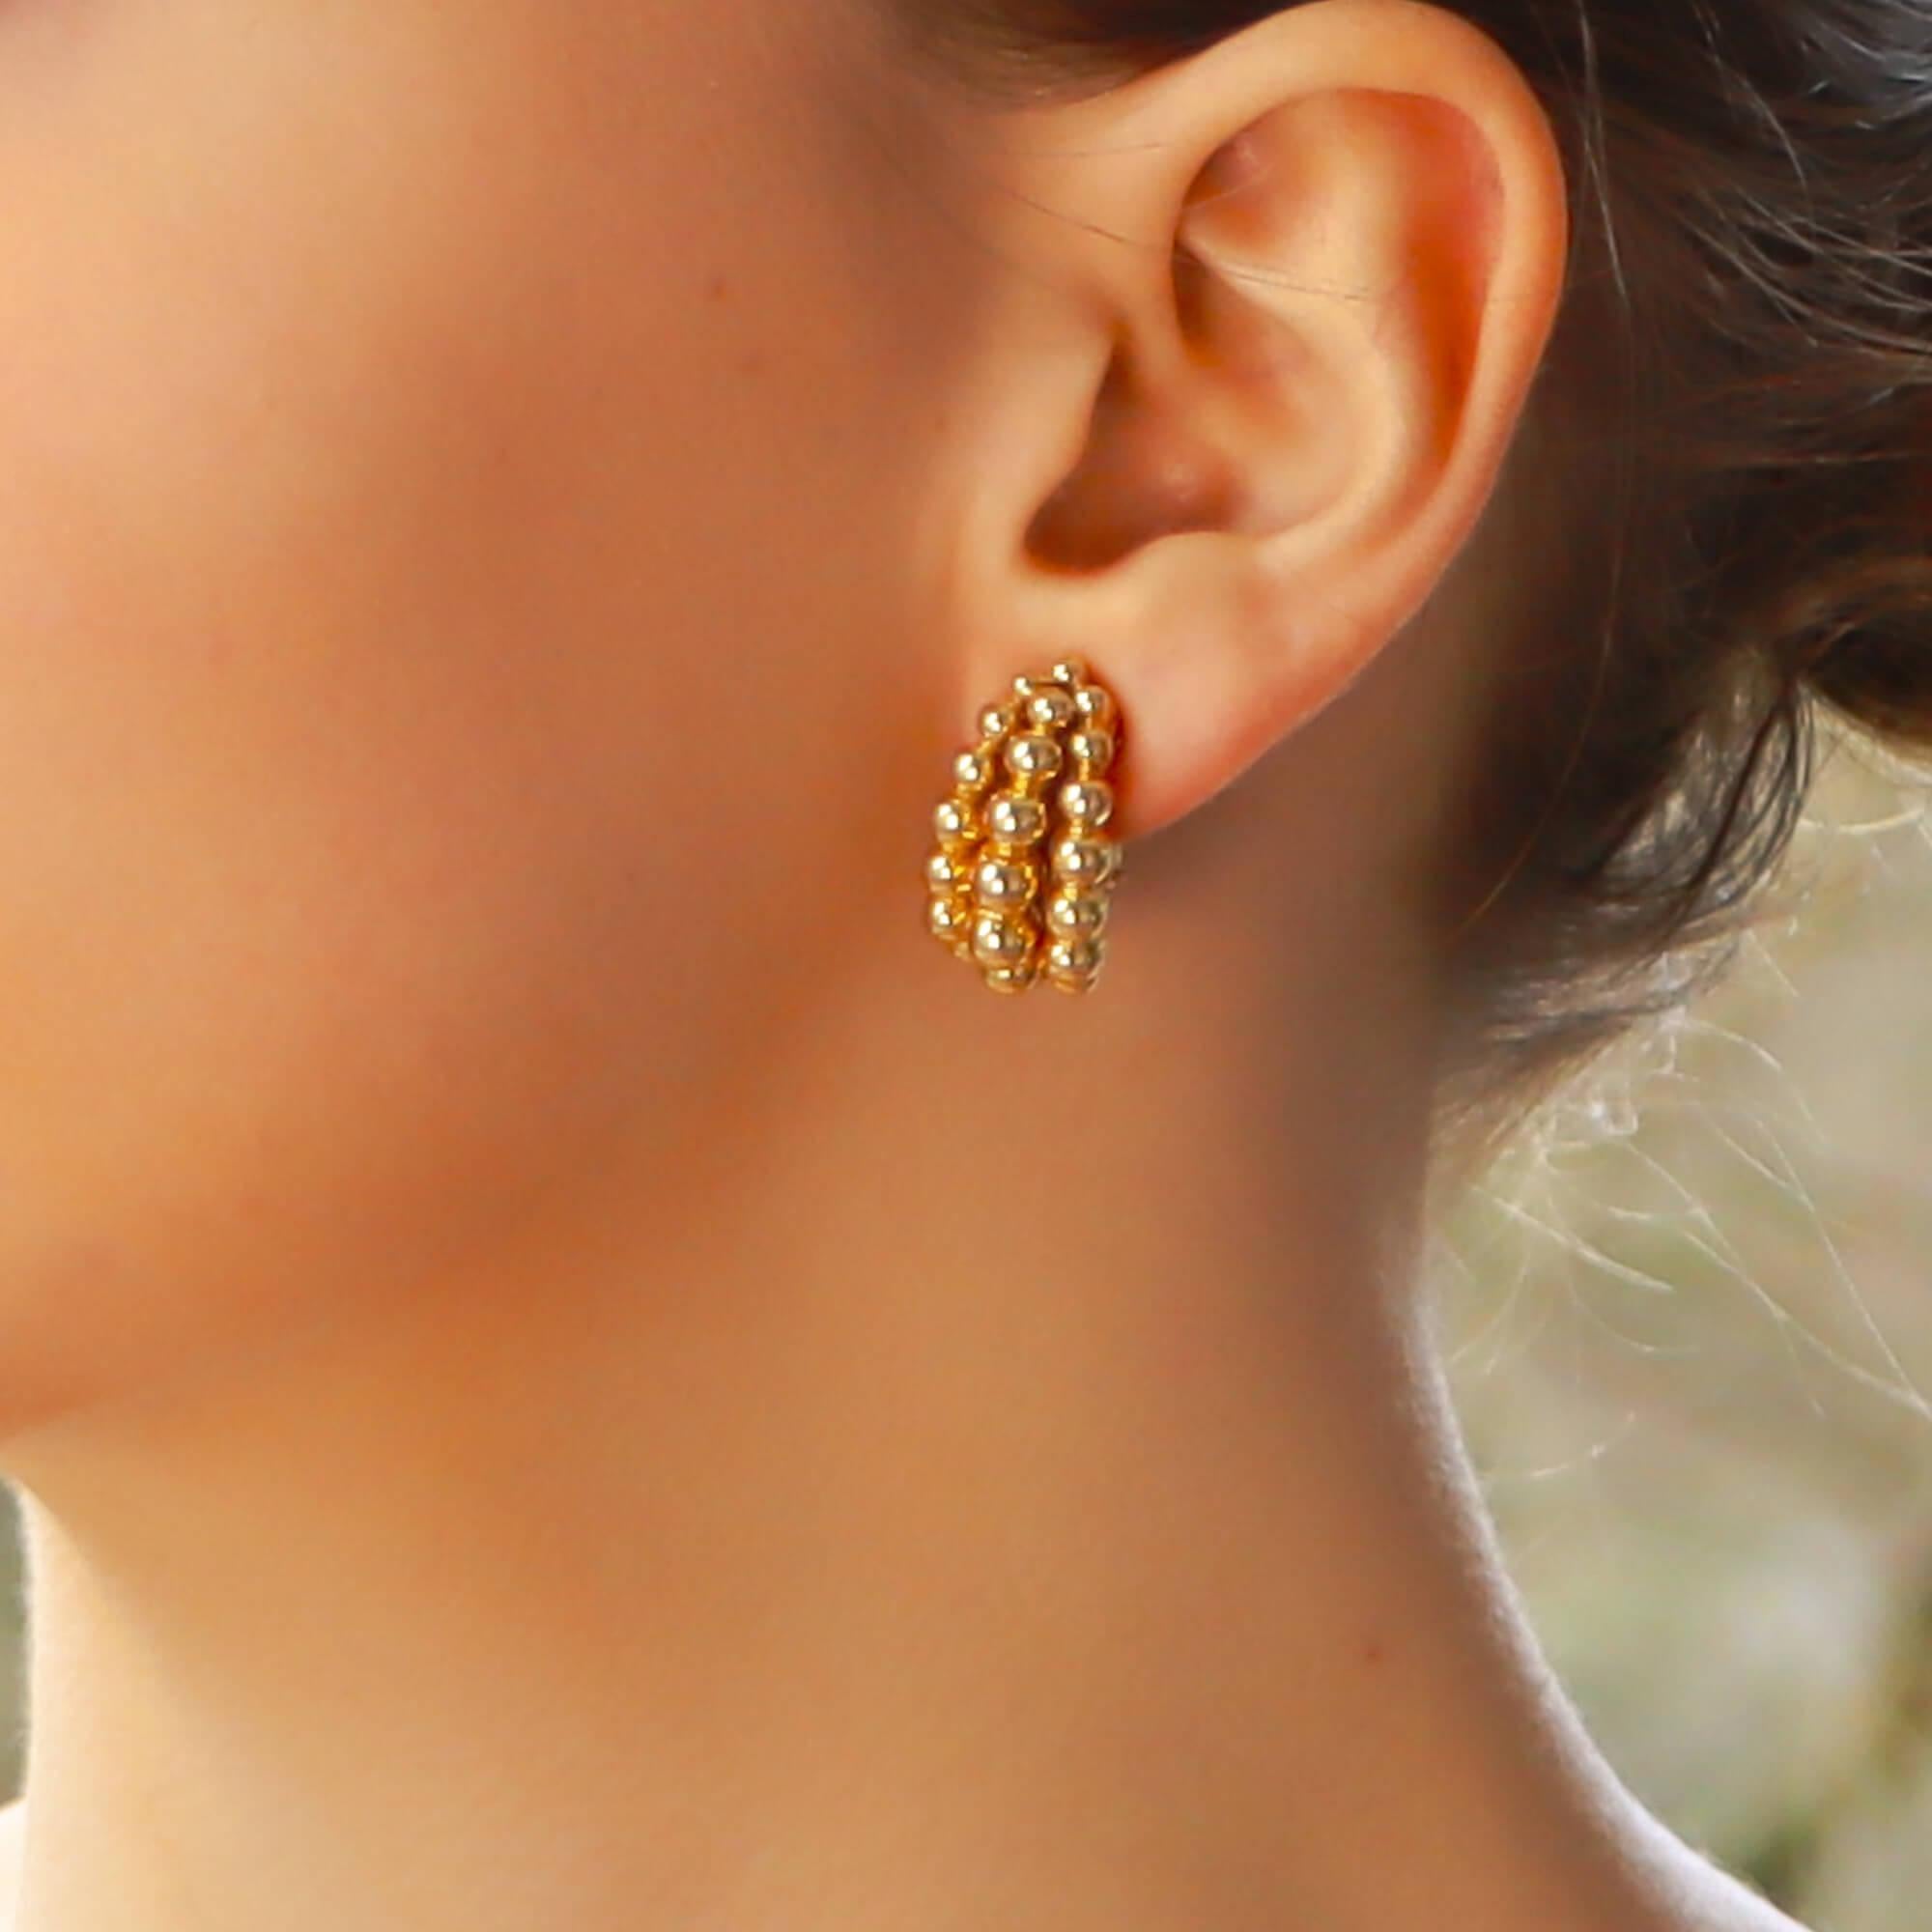 raisin earrings